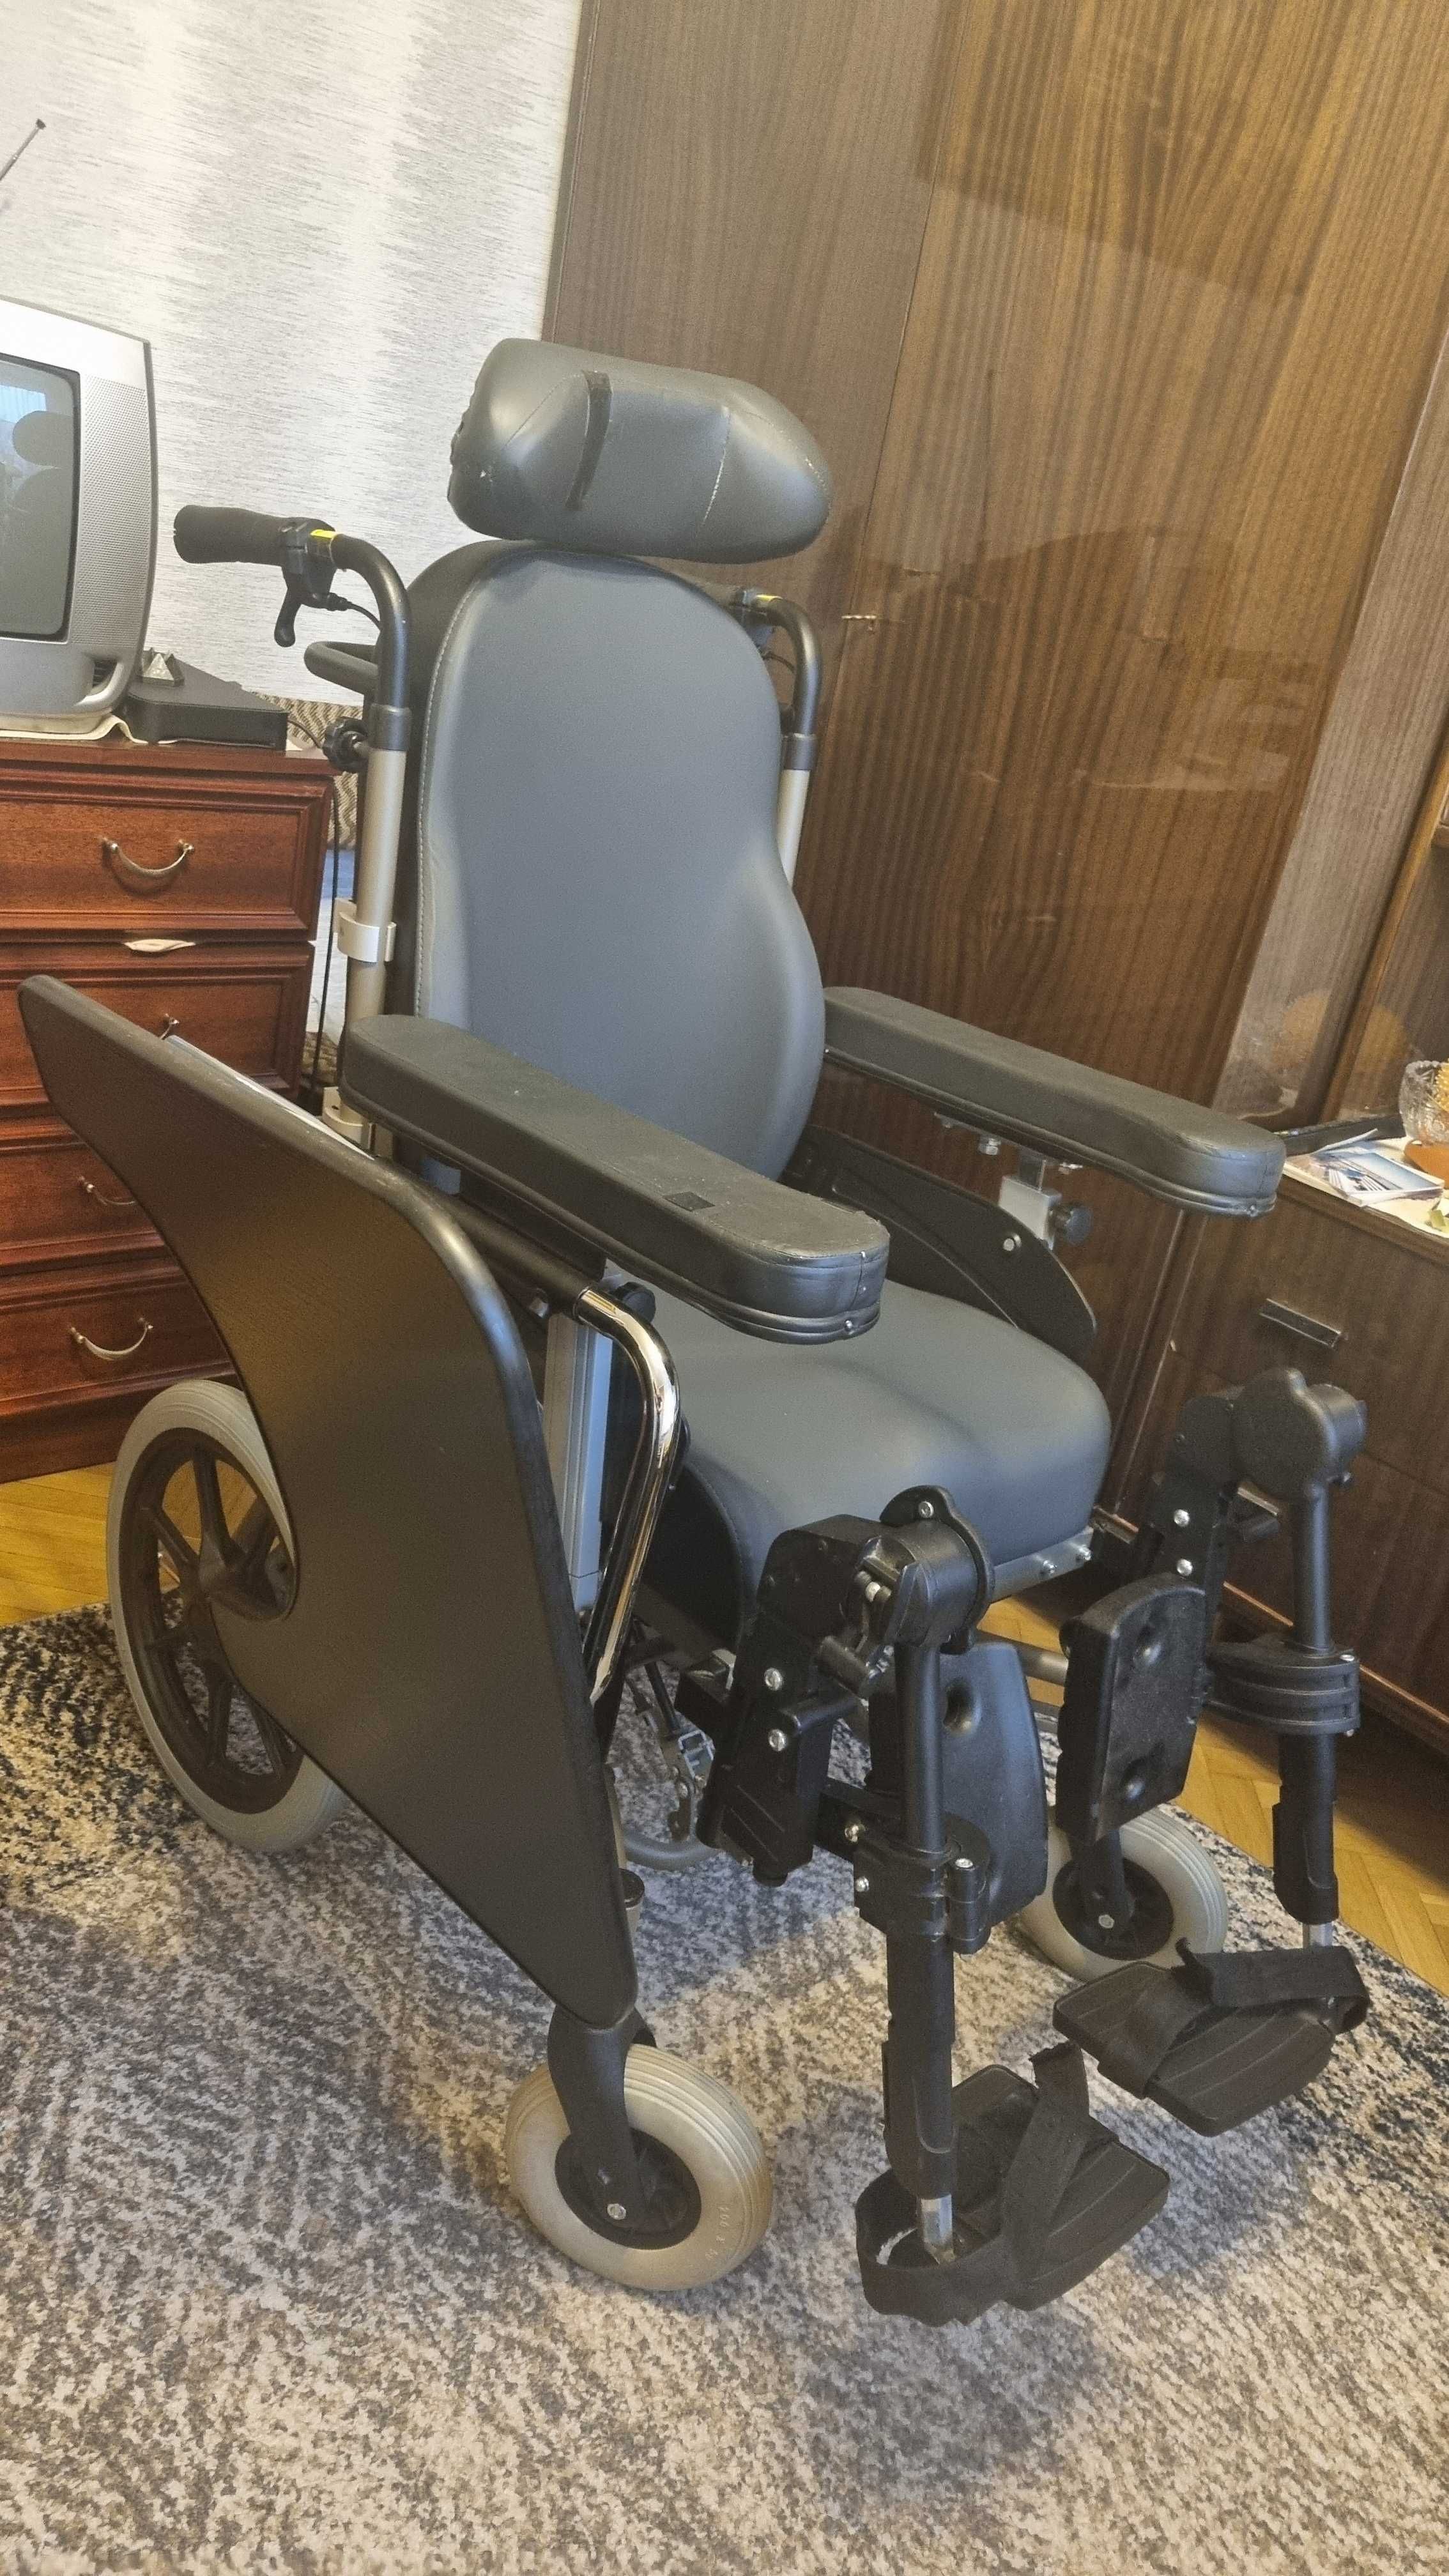 Sprzedam wózek inwalidzki Vermeiren Inovys II